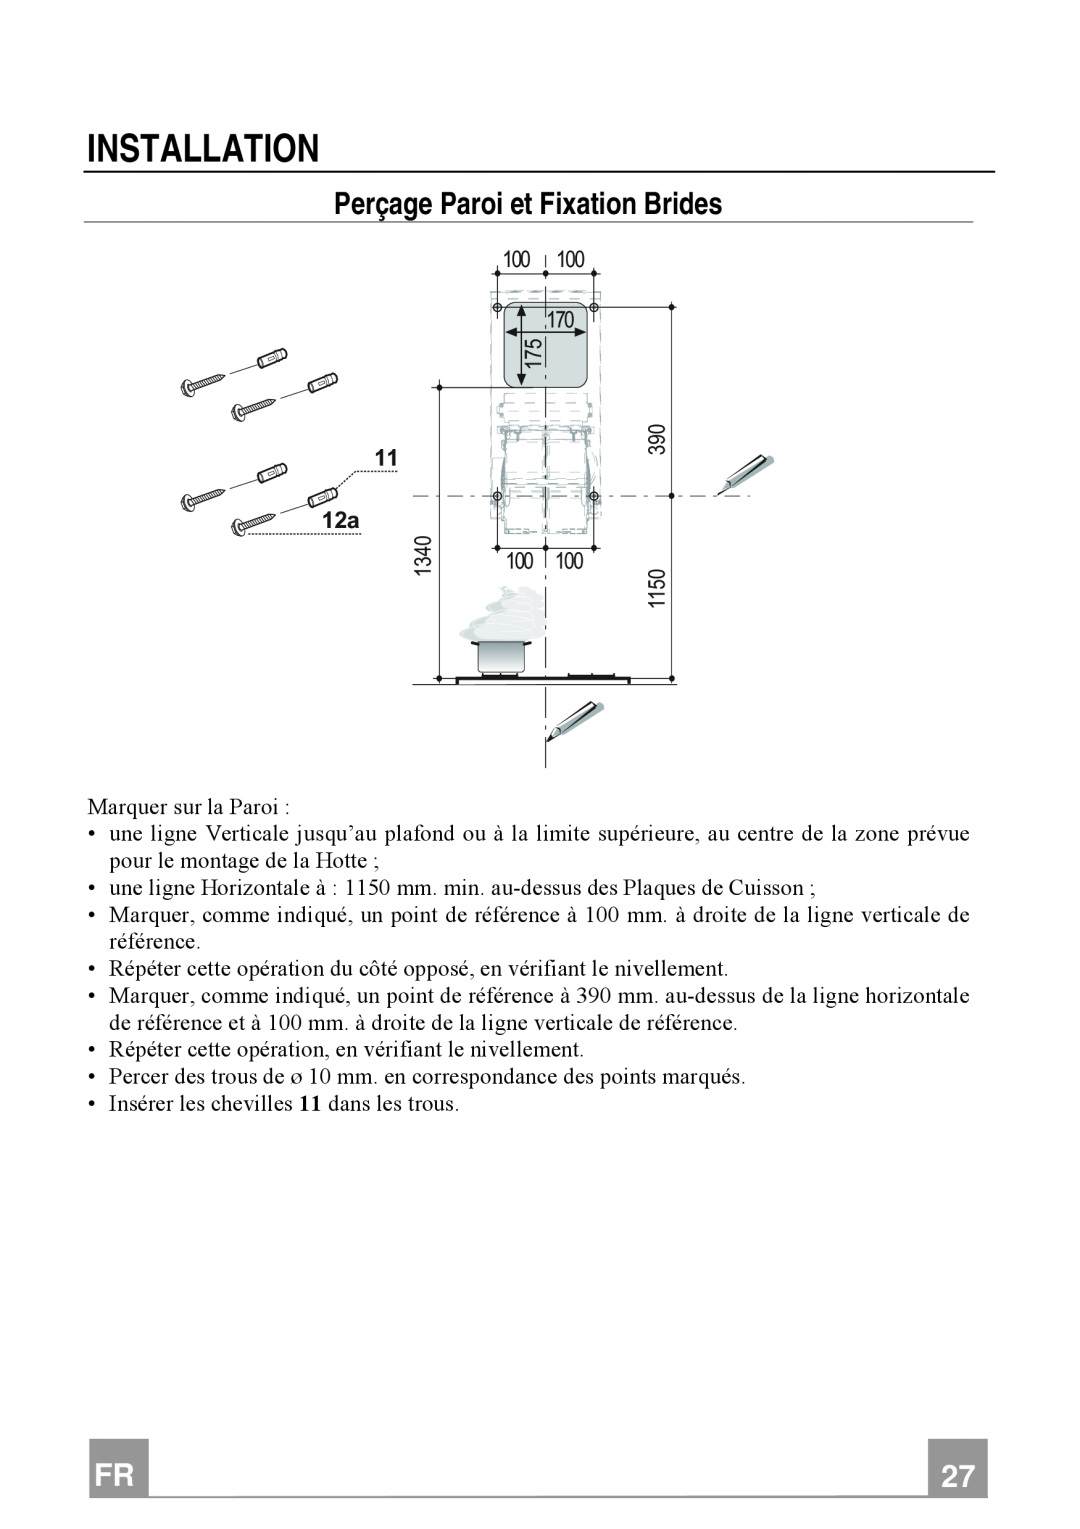 Franke Consumer Products FTU 3807 W manual Perçage Paroi et Fixation Brides, Installation 